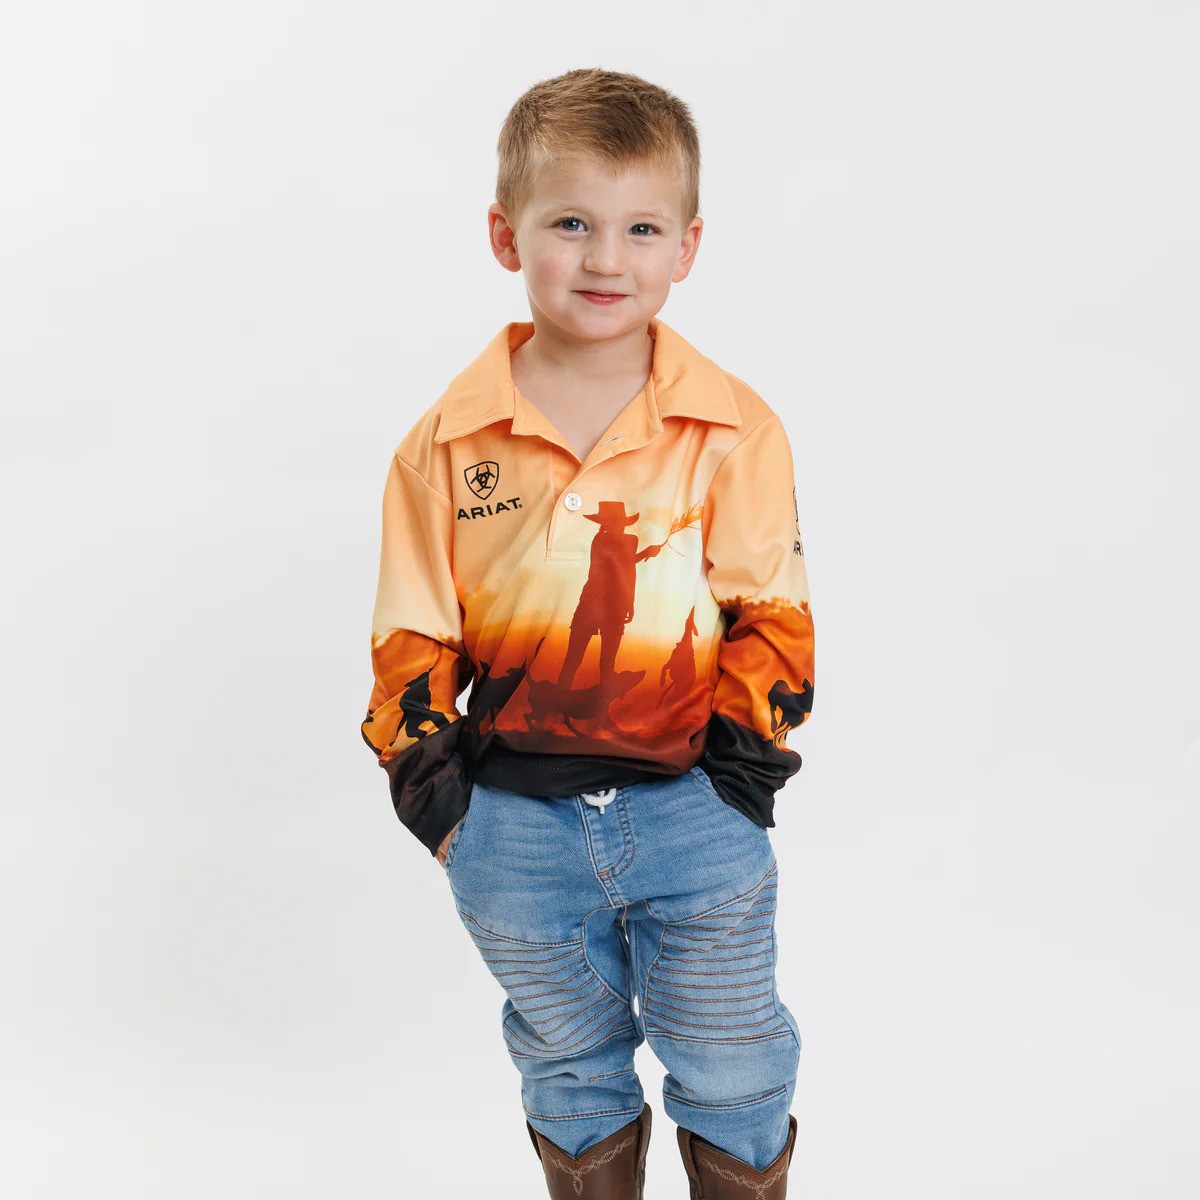 Ariat Kid's Fishing Shirt - Country Kids - Donohues, City